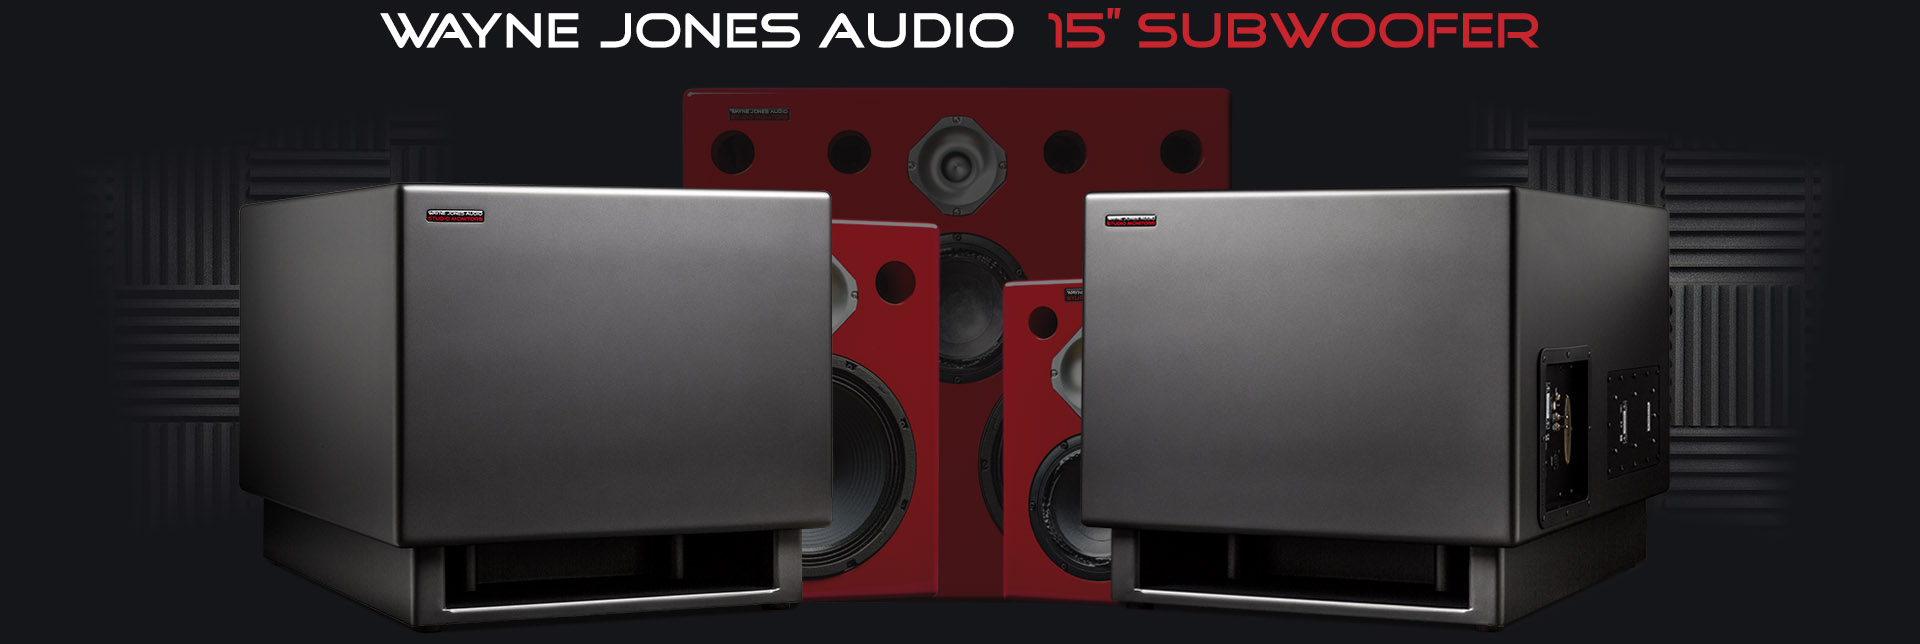 Wayne Jones Audio Studio Monitors 15" subwoofer. Recording engineering, audio and film post production, sound track mastering, audio mixing, sound mixing, recording studio gear.